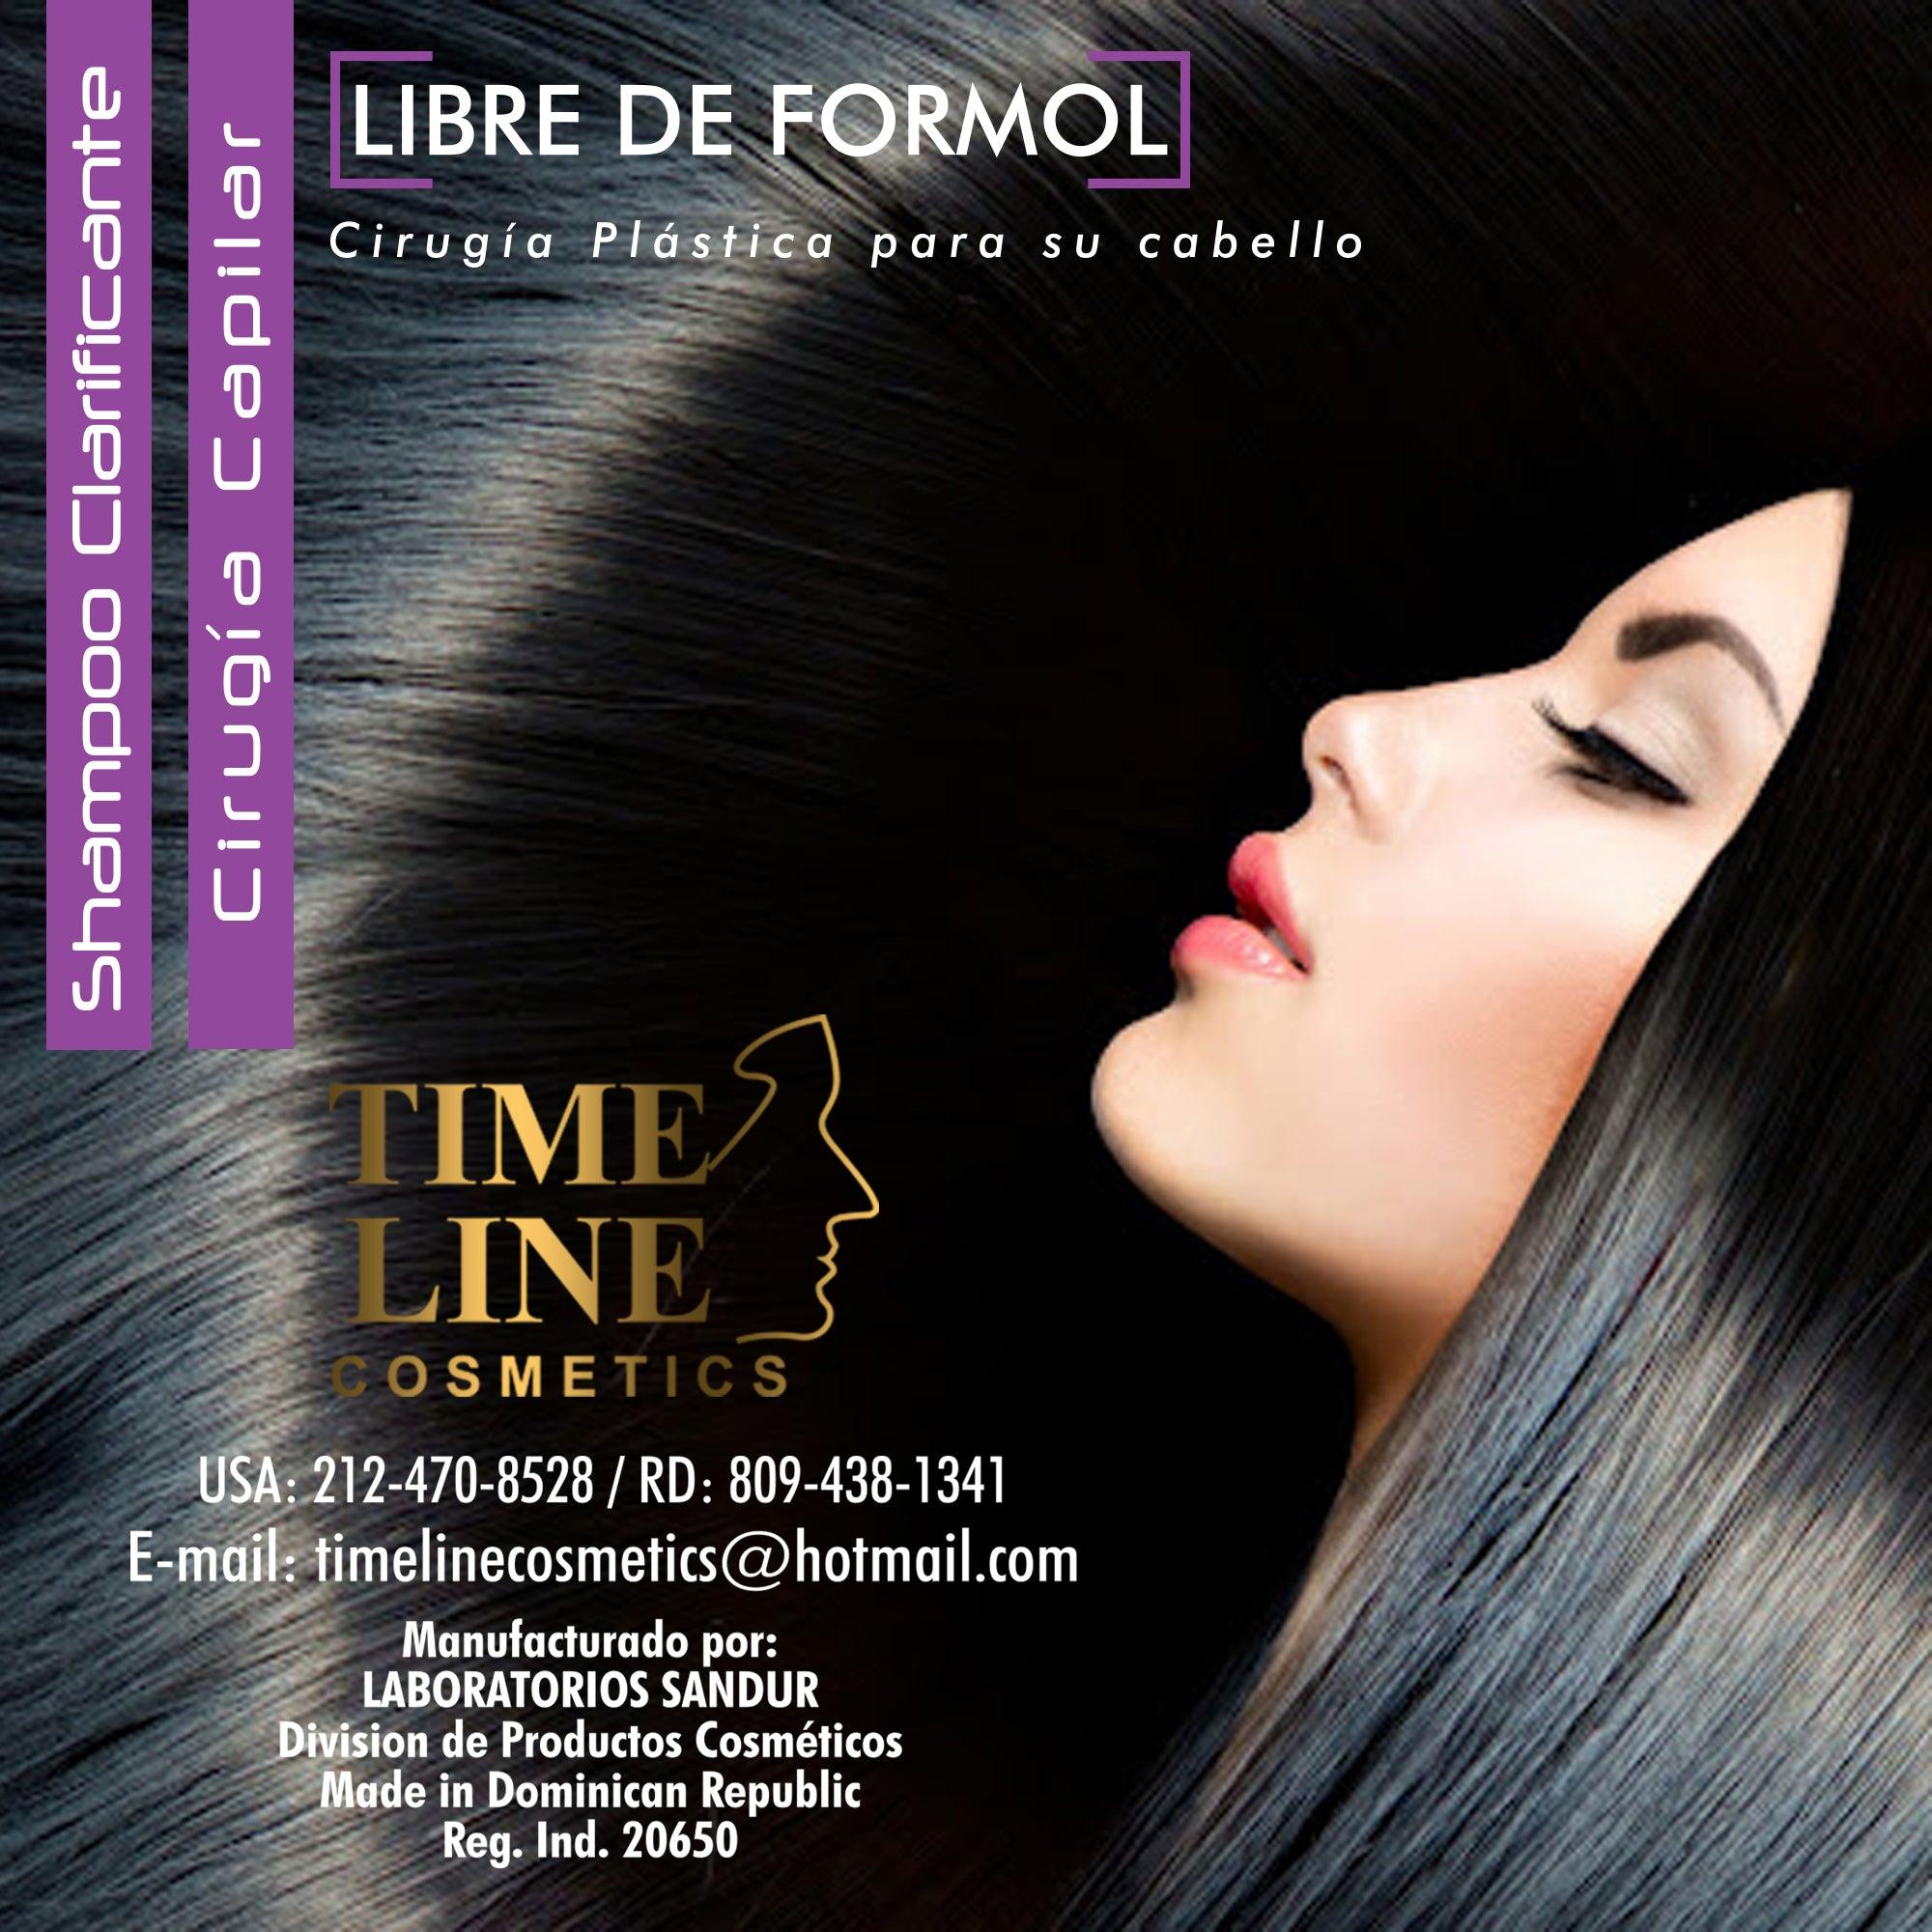 TIME LINE Professional Hair Surgery Treatment Kit, Hair Surgery For Professional Hair Keratin For Damaged Hair (4 Ounce) 2 Step - AMOSTIMELINE